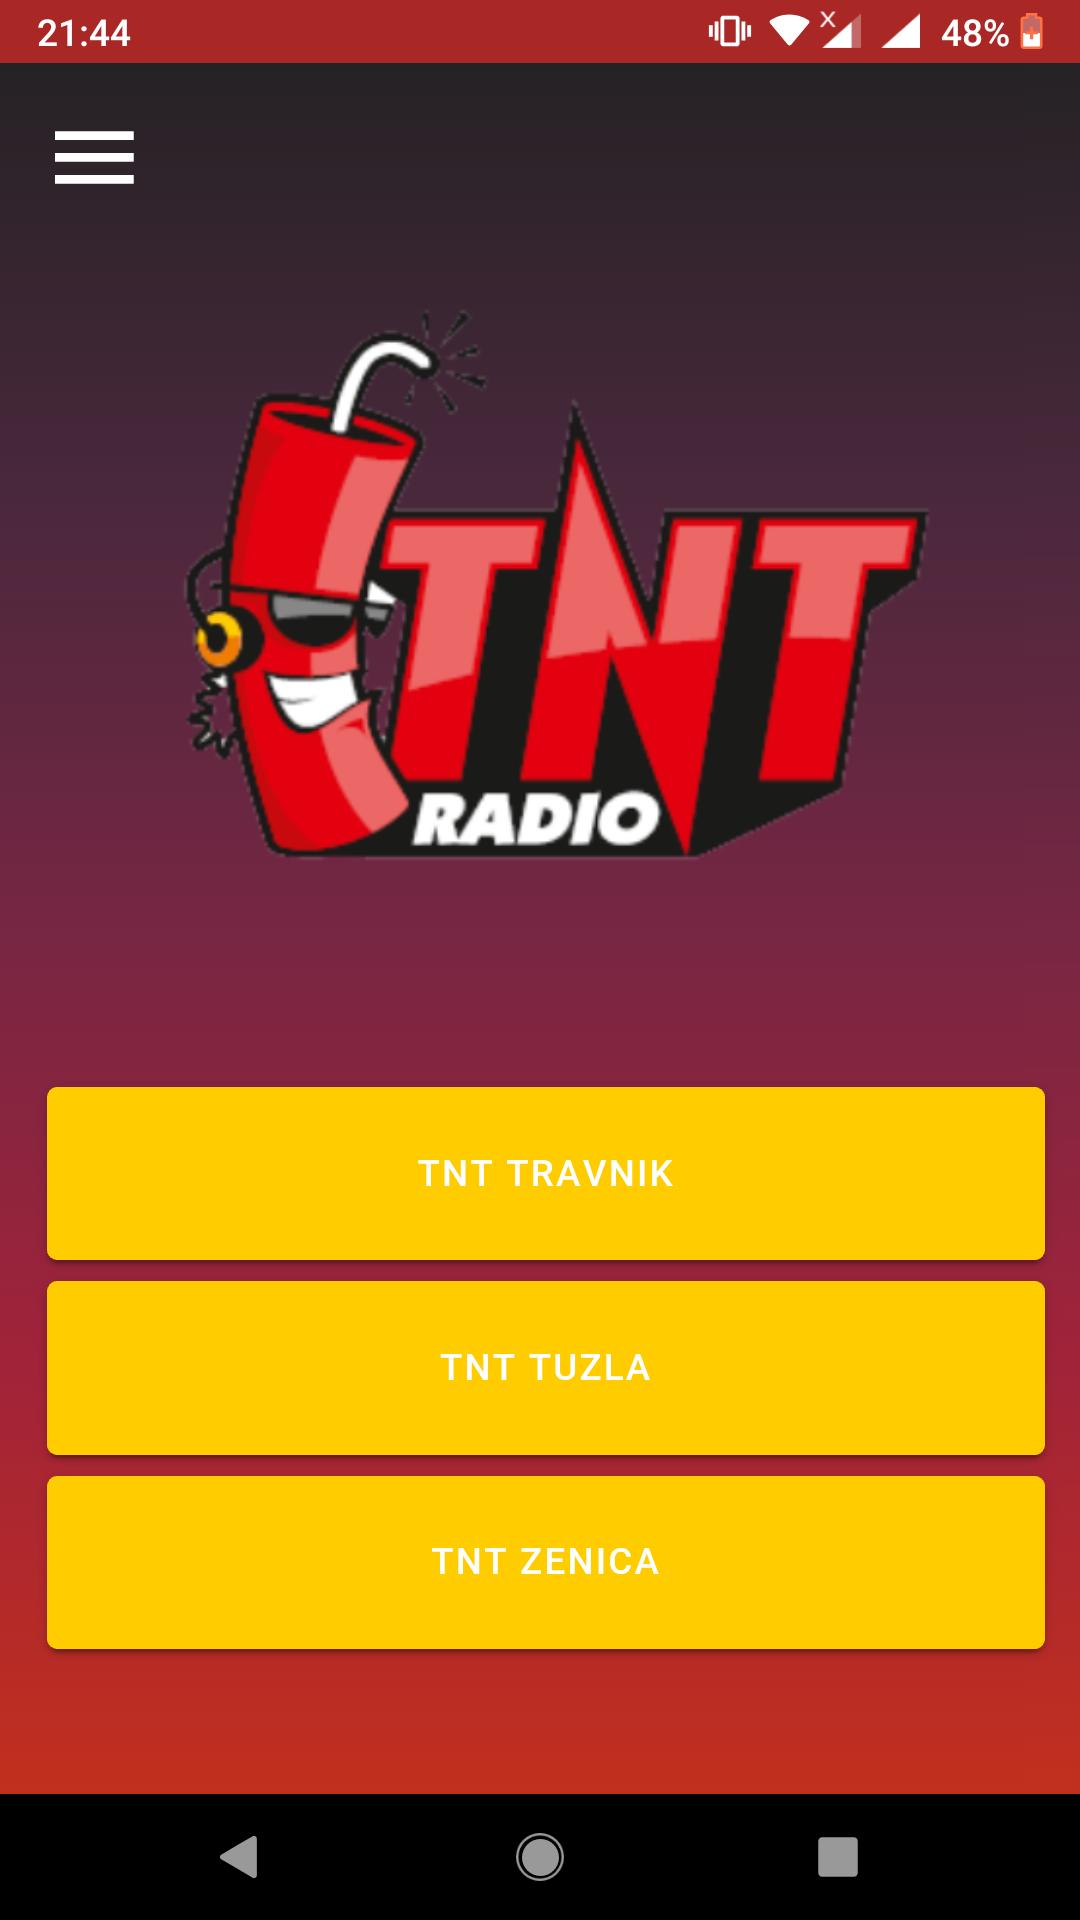 Тнт радио эфир. ТНТ радио. Андроид ТНТ. ТНТ радио игра. Наше радио ТНТ.